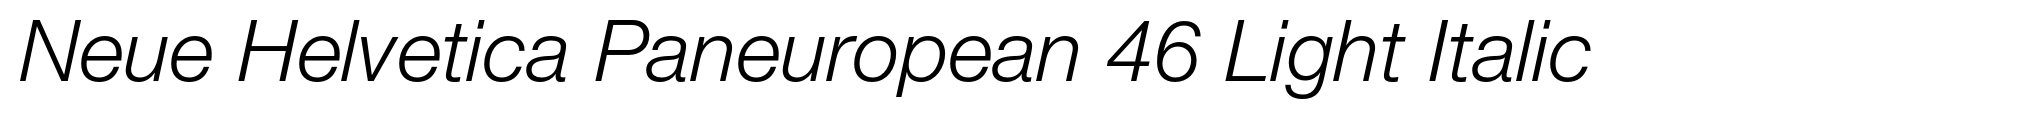 Neue Helvetica Paneuropean 46 Light Italic image